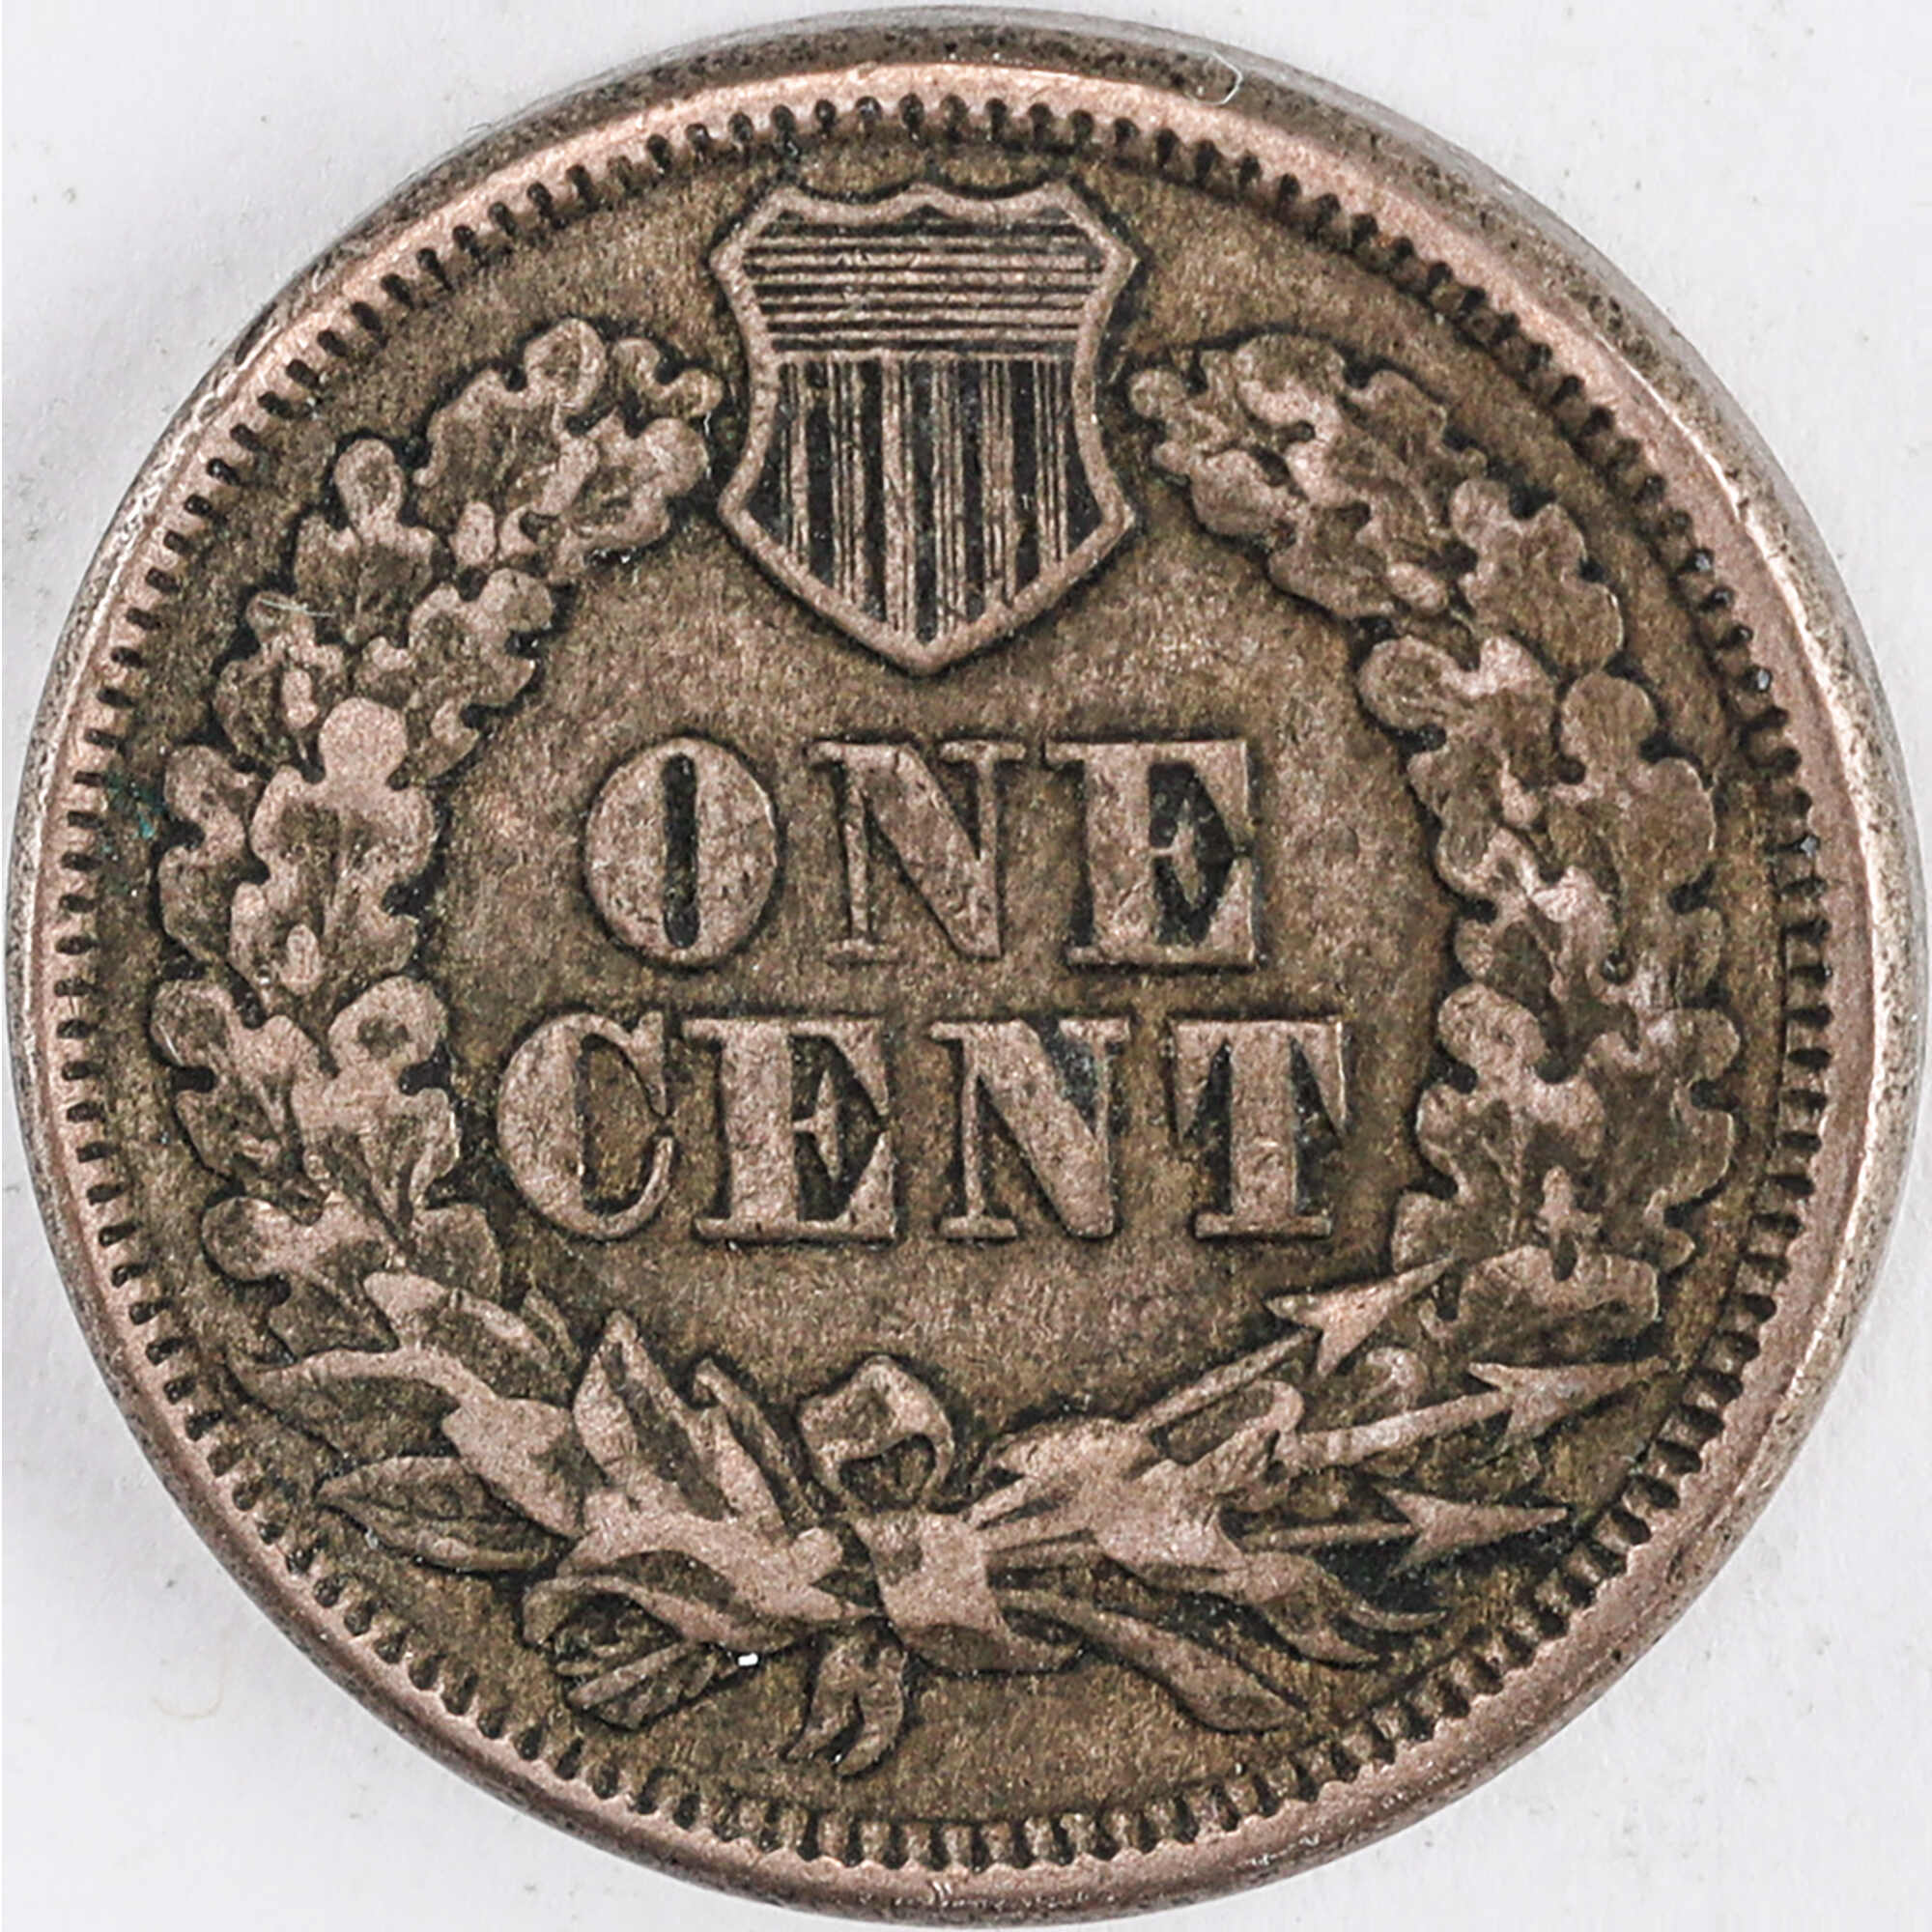 1863 Indian Head Cent VF Very Fine Copper-Nickel Penny SKU:I12407